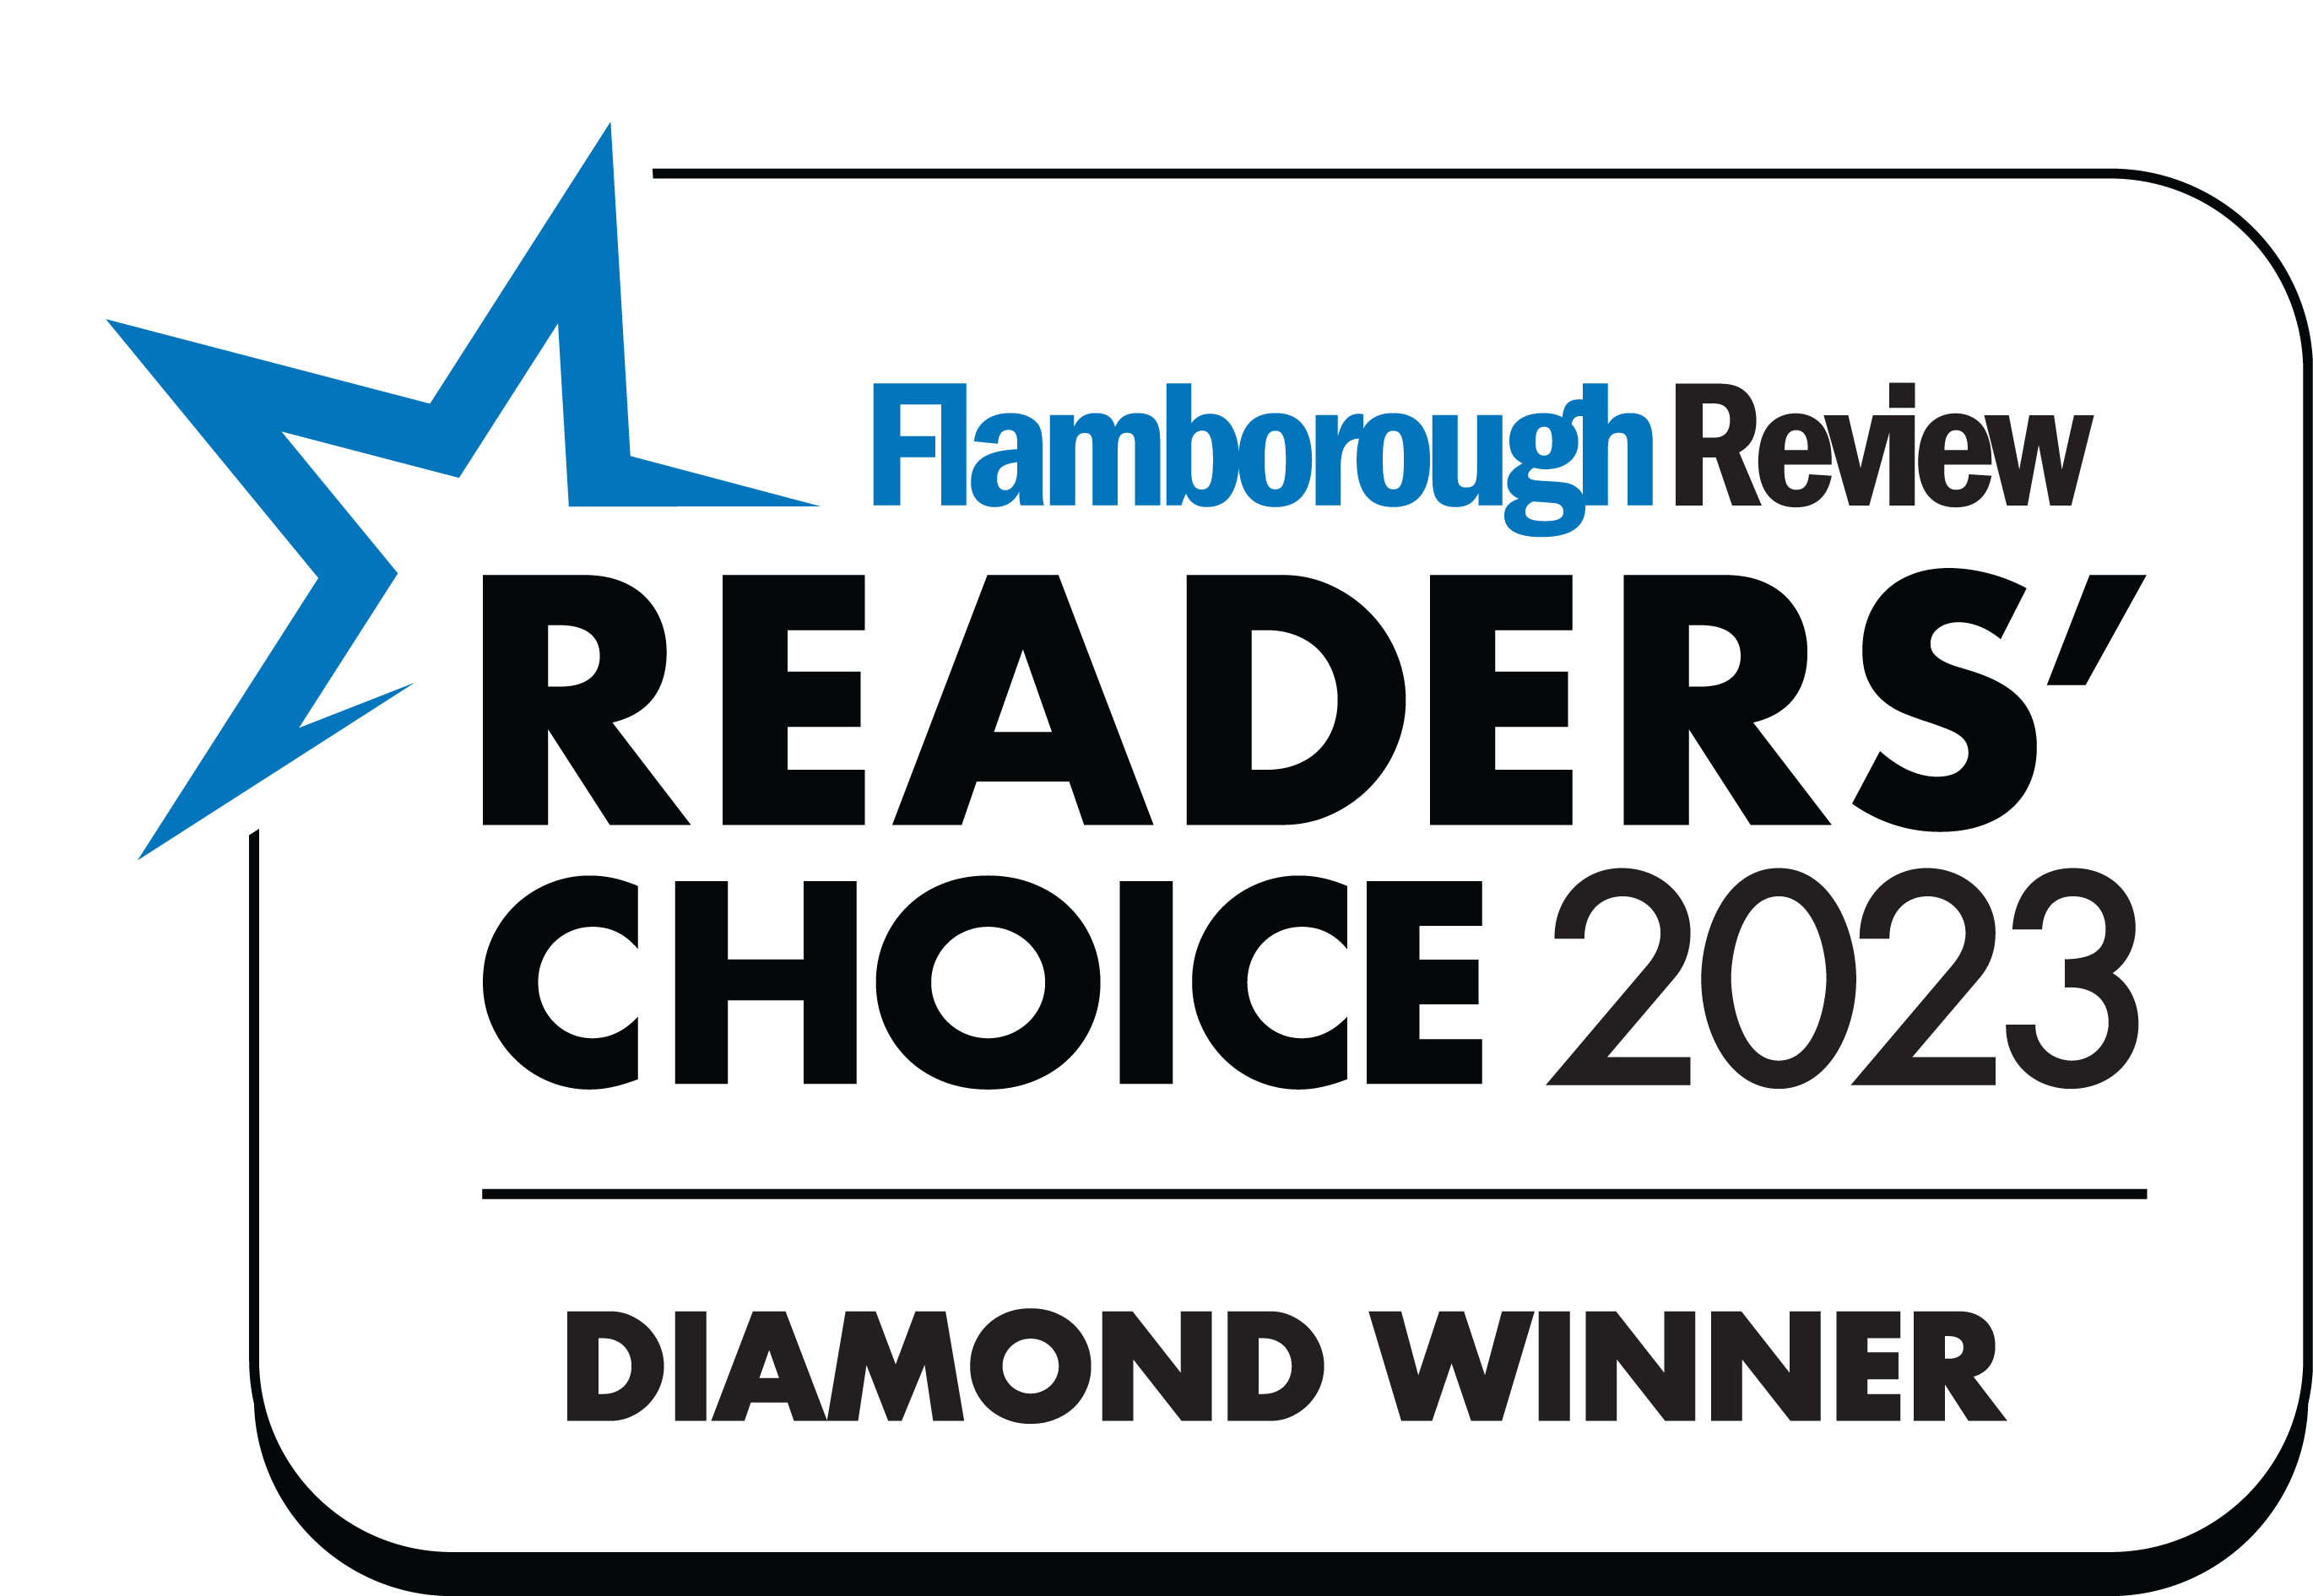 Flamborough Review Reader's Choice 2023: Diamond Winner